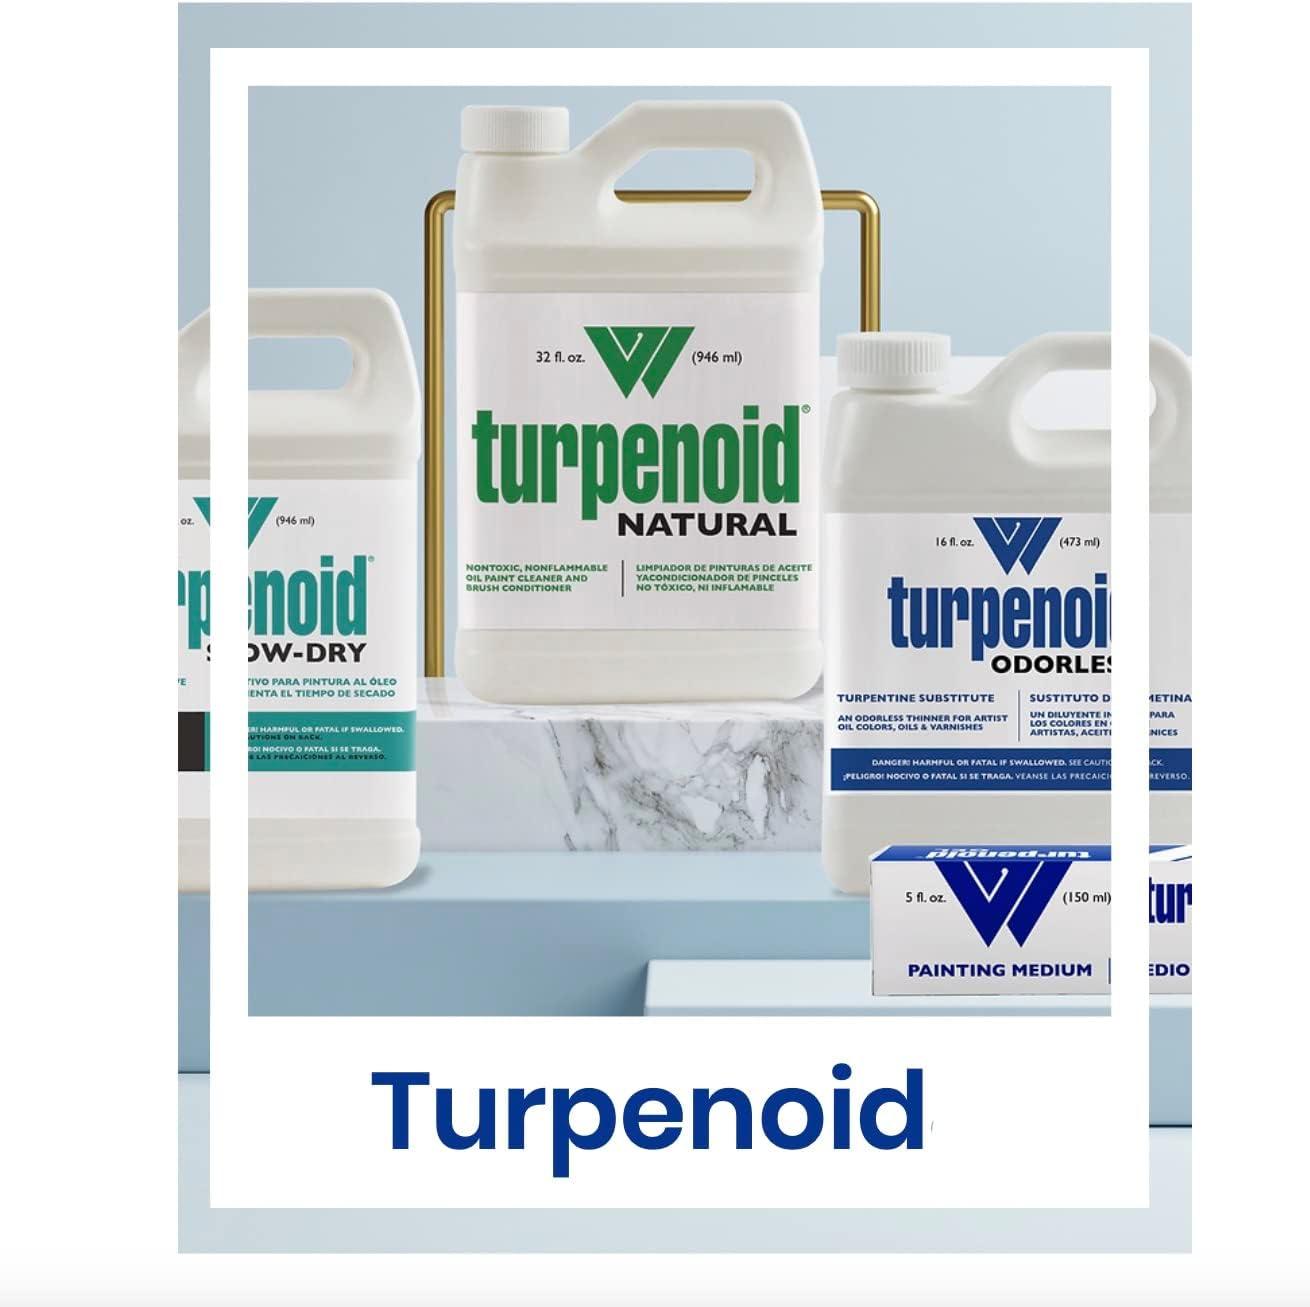 Turpenoid Natural Brush Cleaner